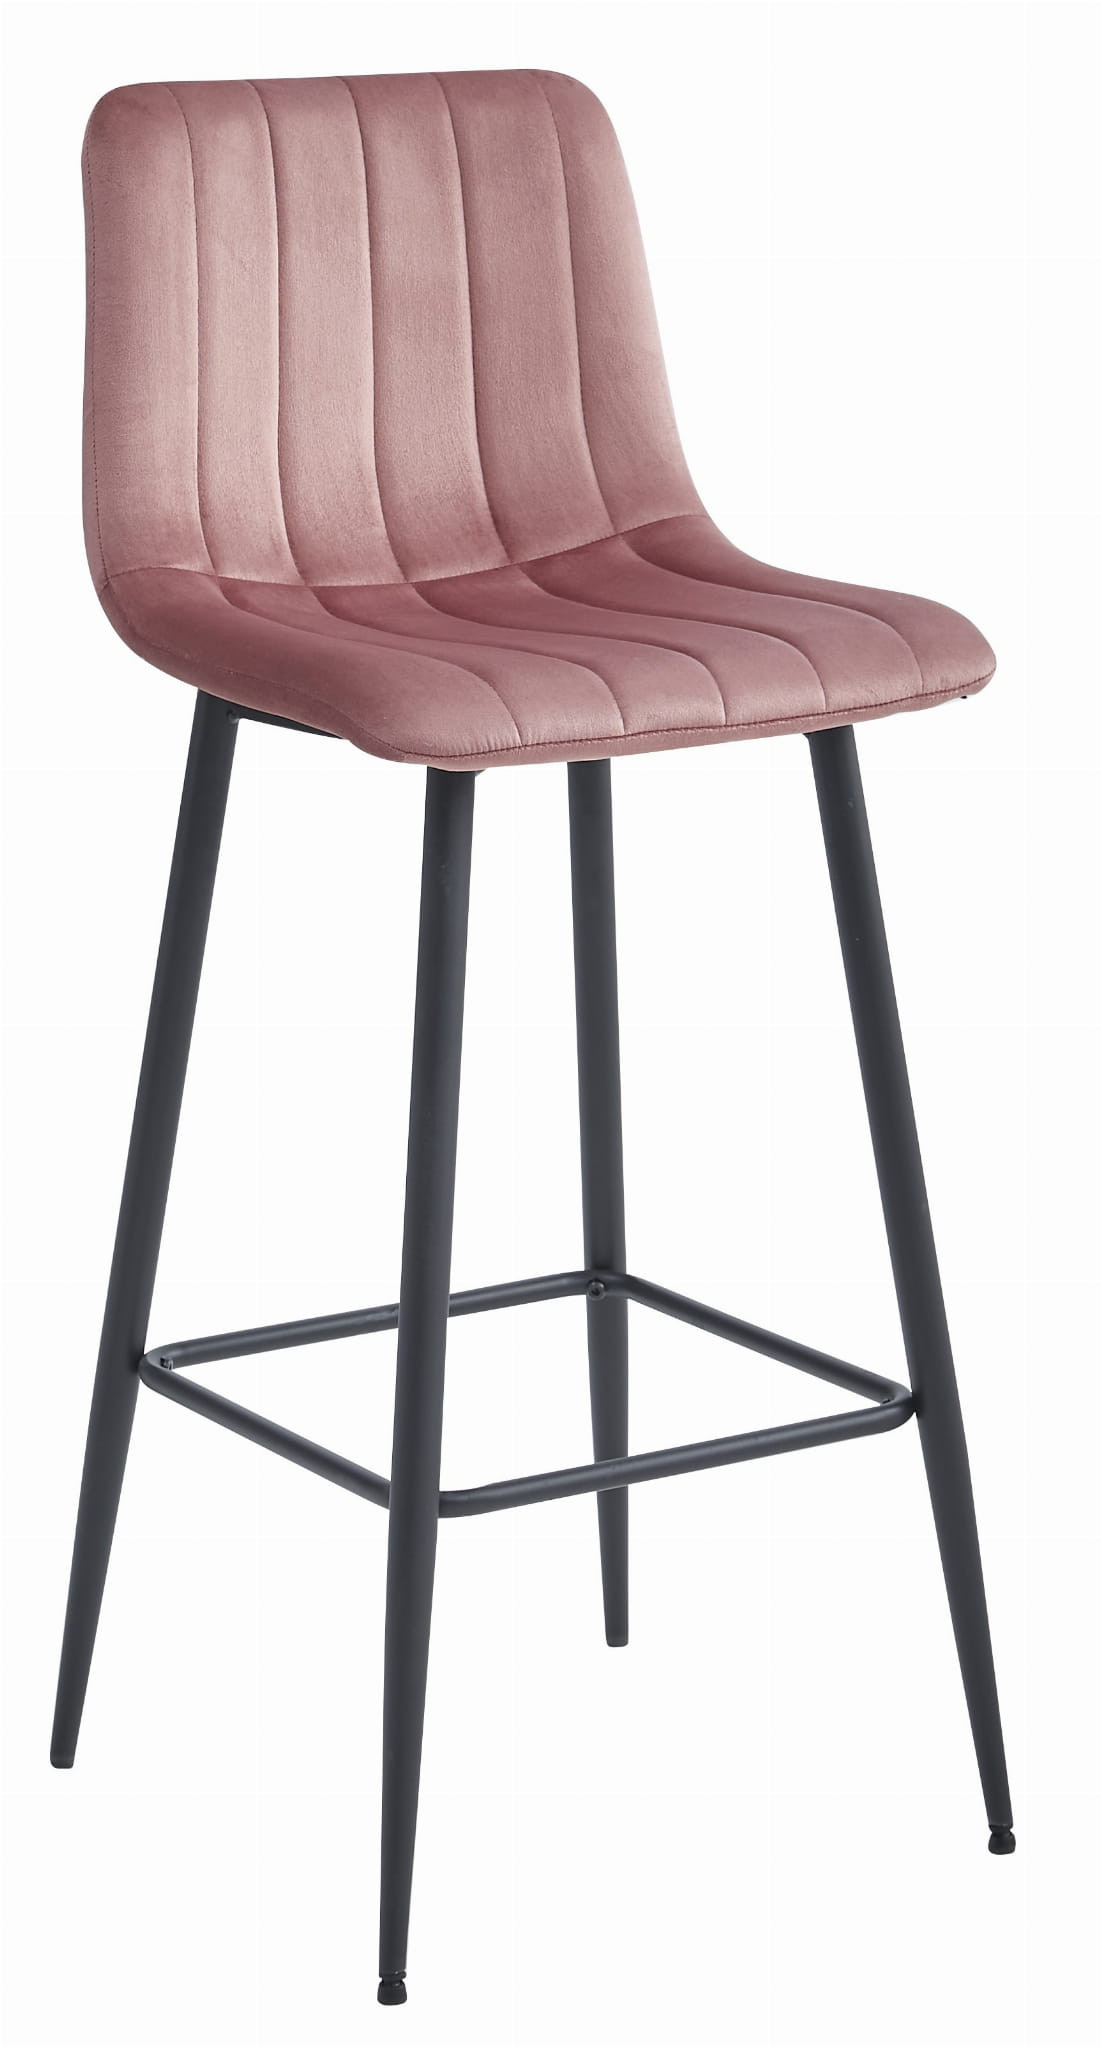 Set dvoch barových stoličiek POZZA zamatové ružové (čierne nohy) 2 ks